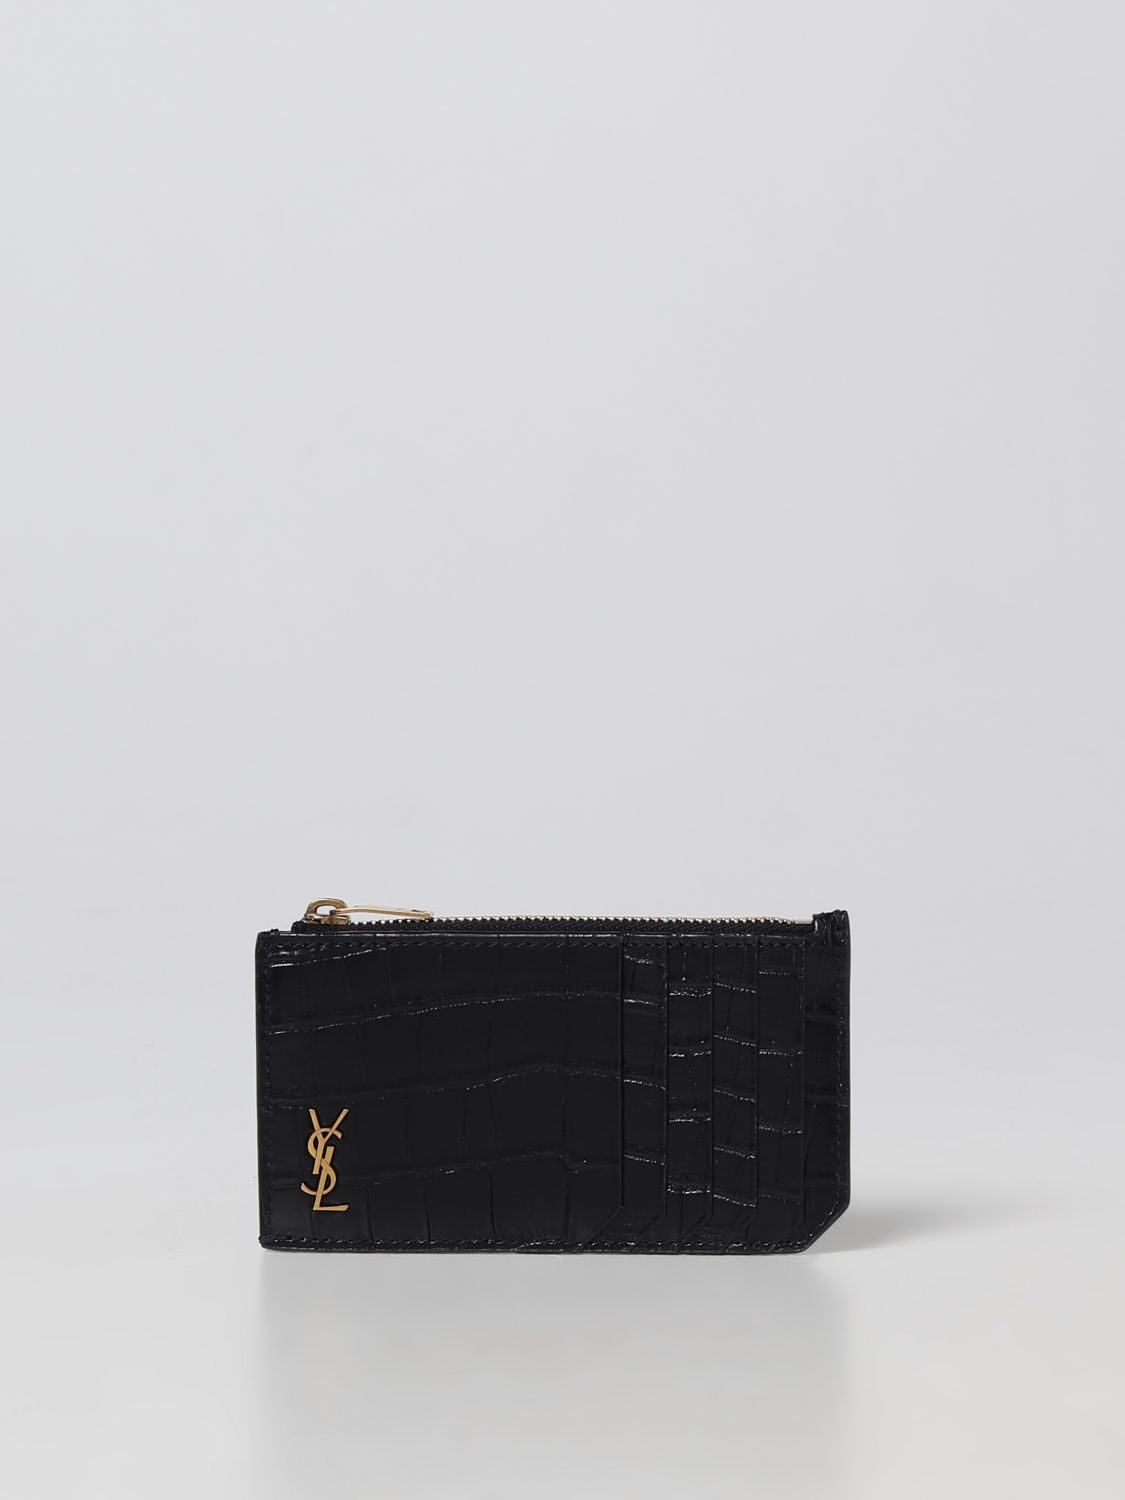 Saint Laurent Black Croc-Embossed Card Holder  Wallet men, Mens card holder,  Card holder leather